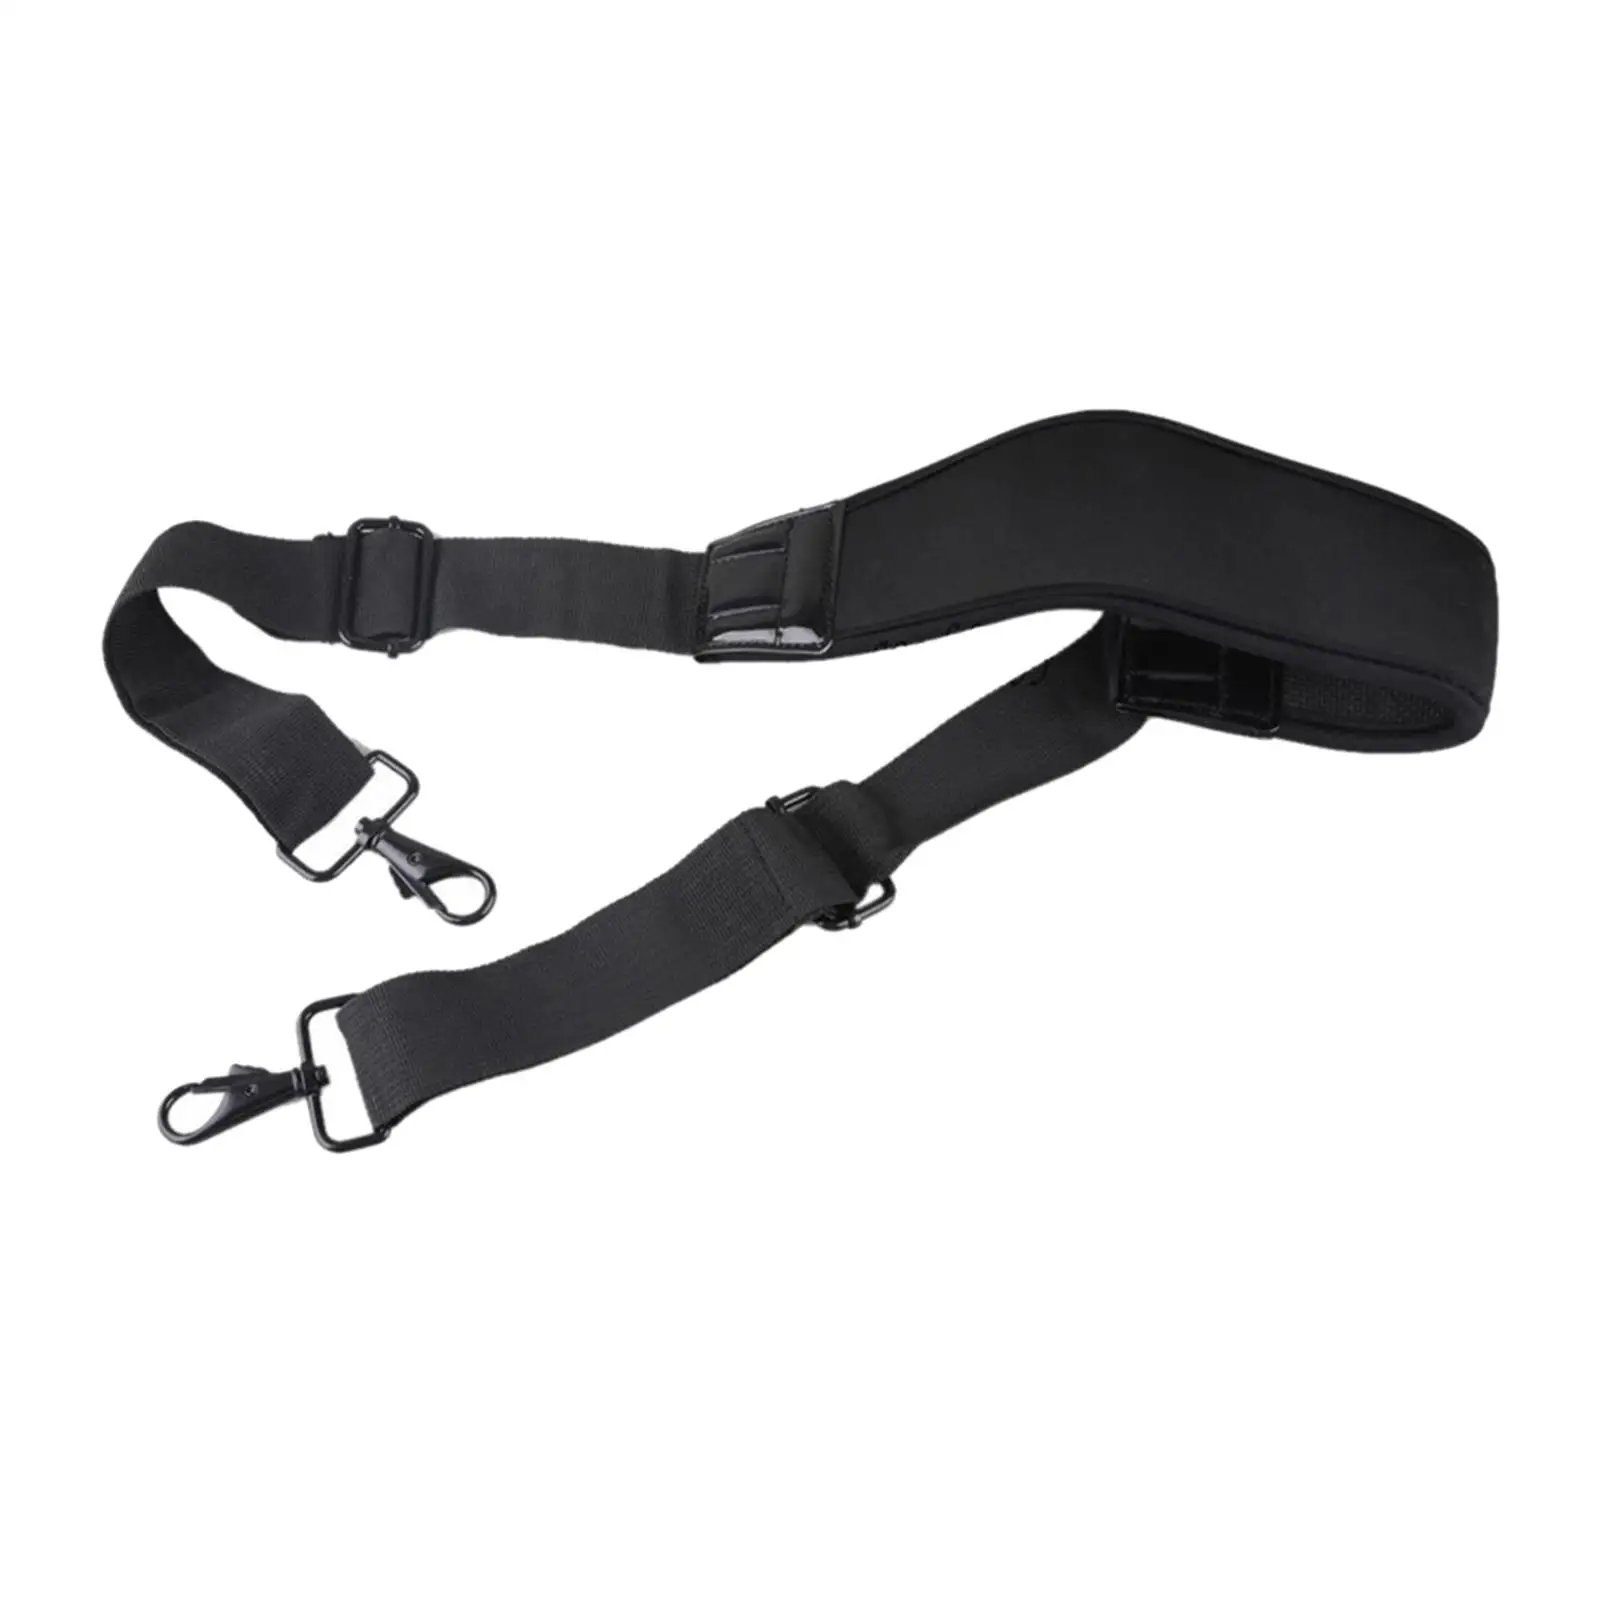 Shoulder Strap Thick Comfortable 52inch Soft with Metal Hooks Black Adjustable for Camera